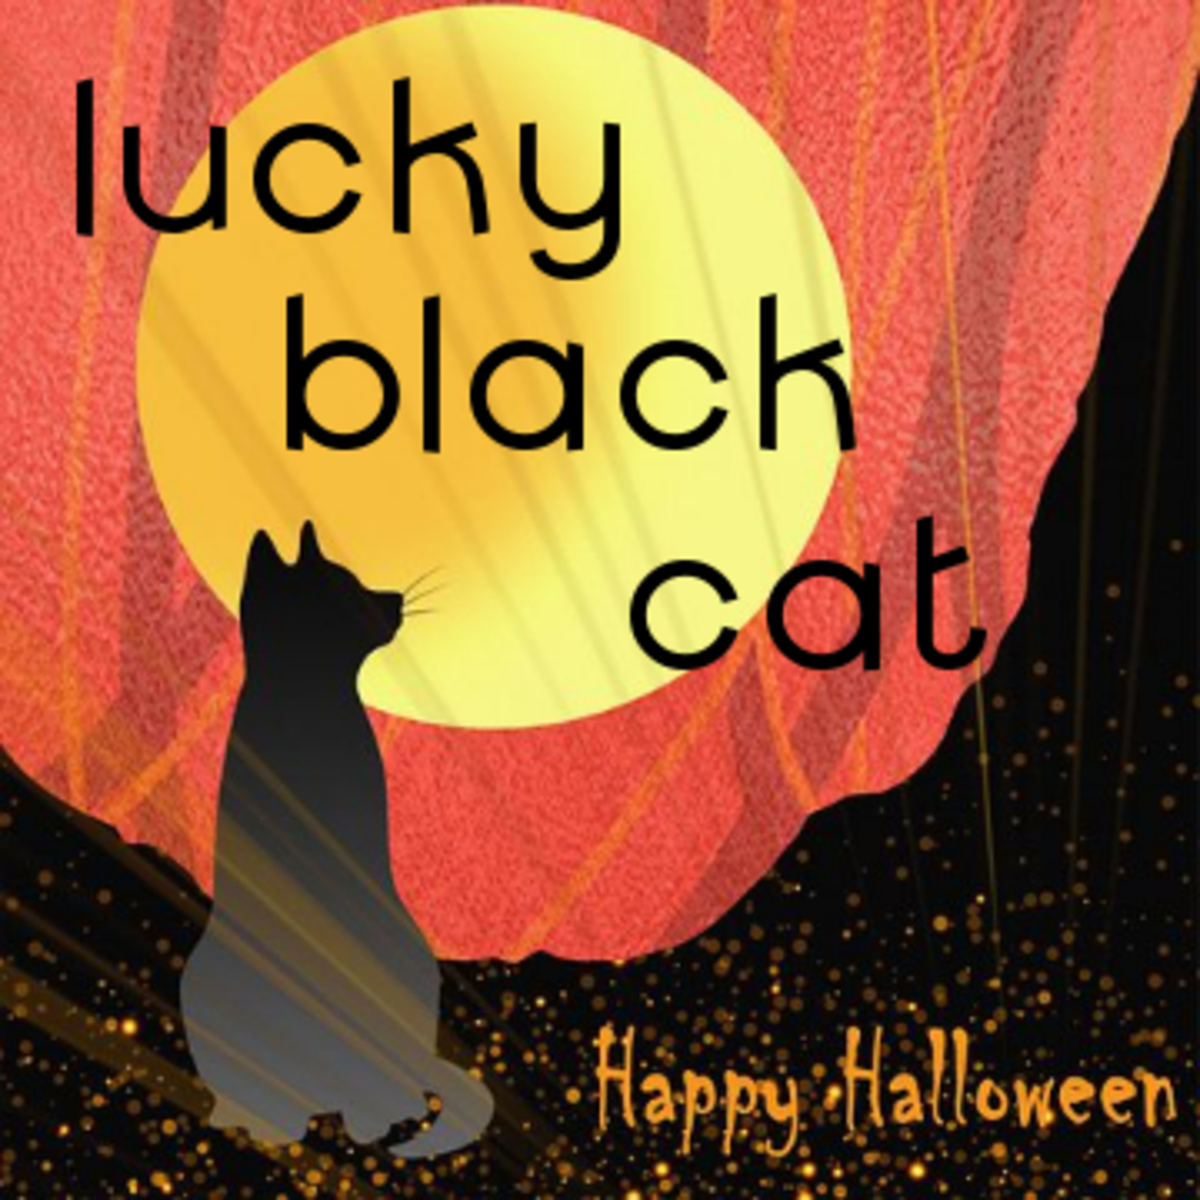 poem-lucky-black-cat